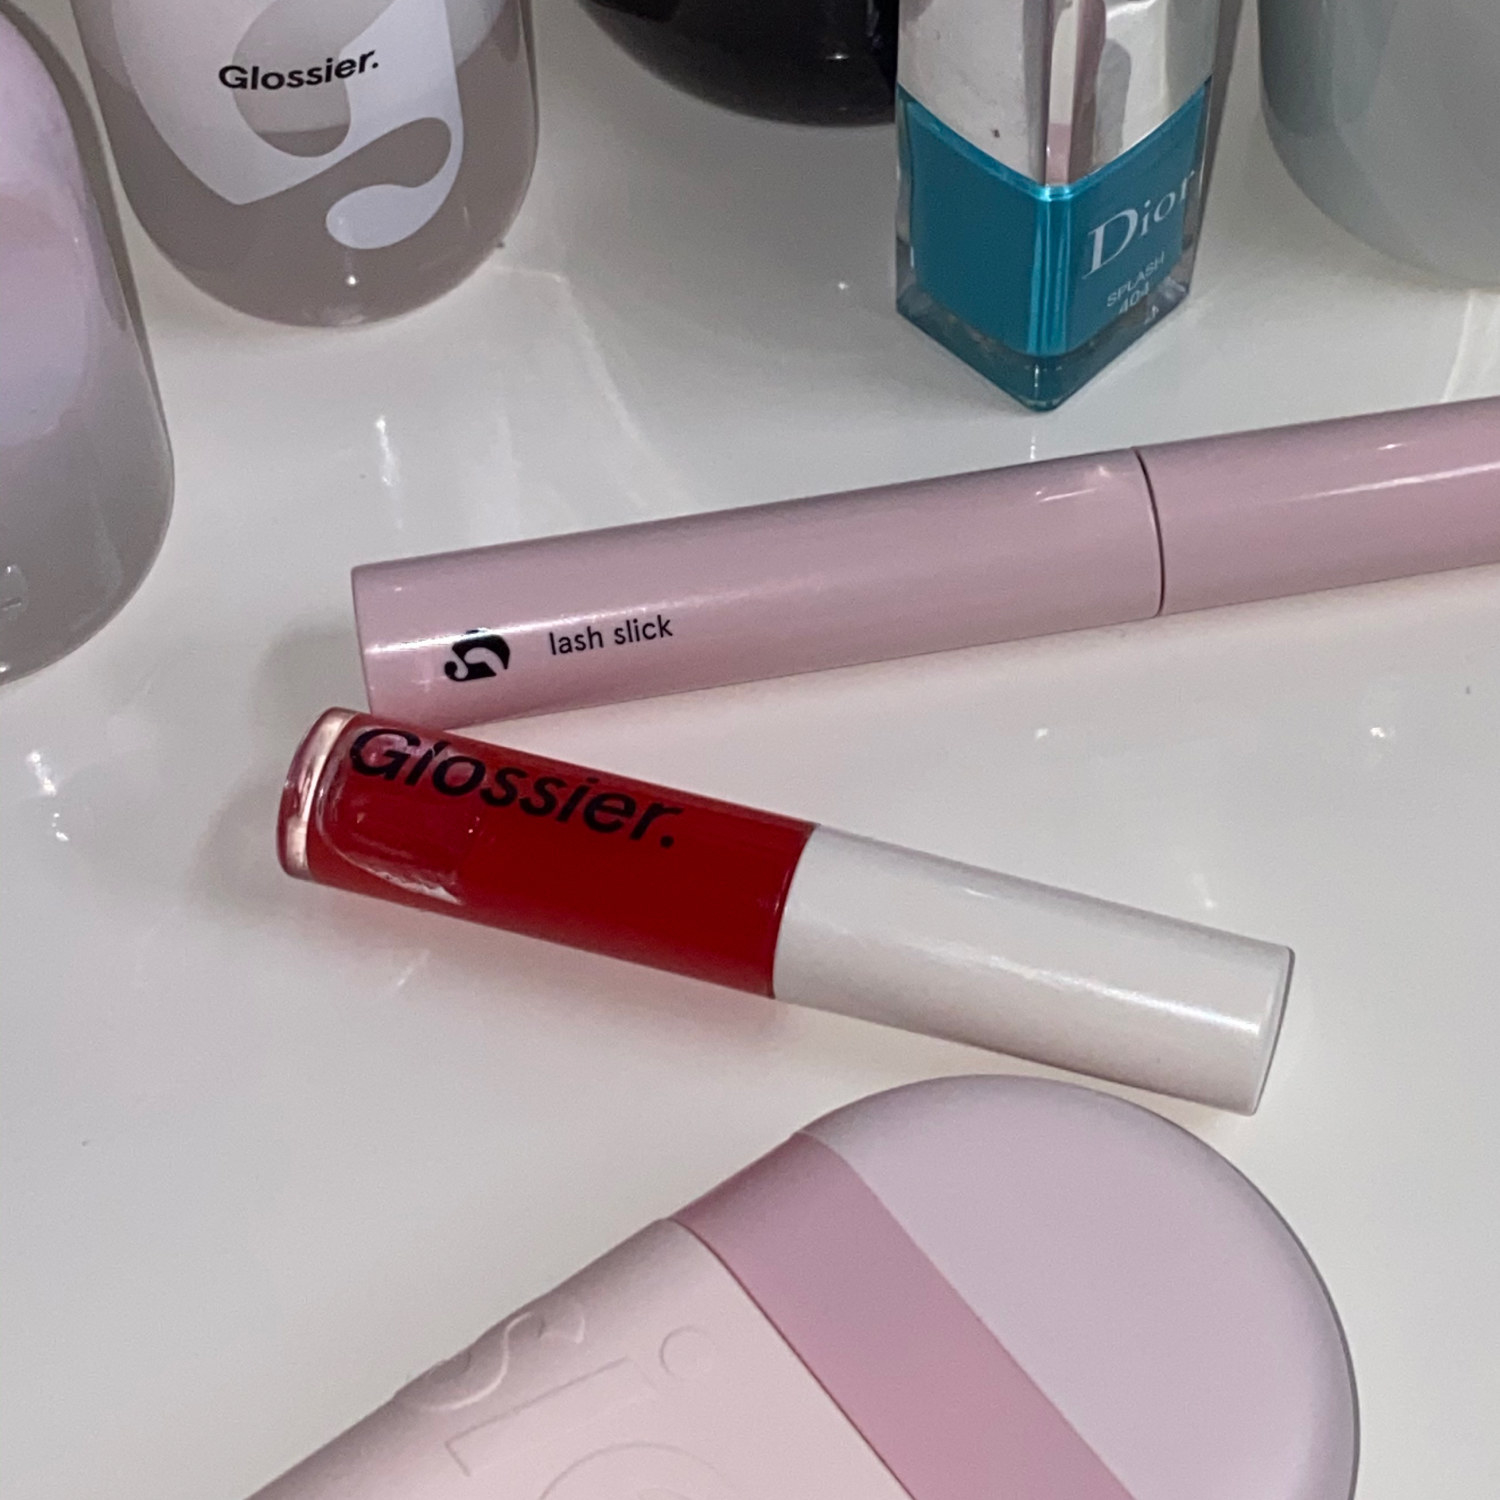 the mascara, a lip gloss, and a hand cream on a table